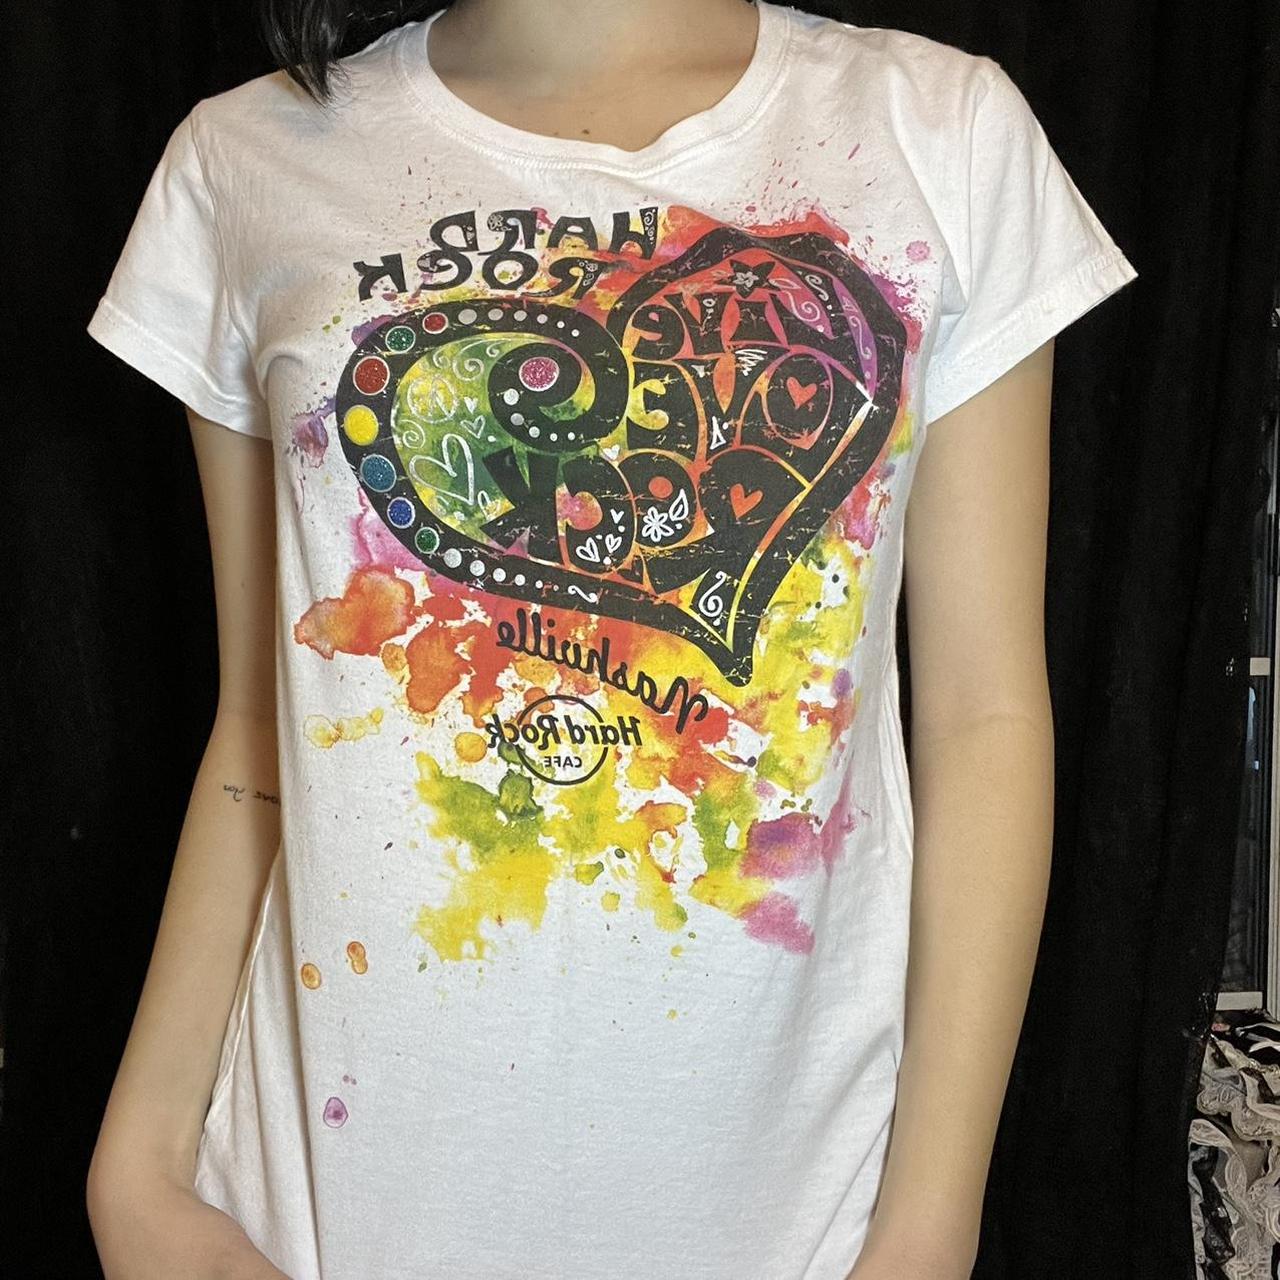 Hard Rock Cafe Women's multi T-shirt